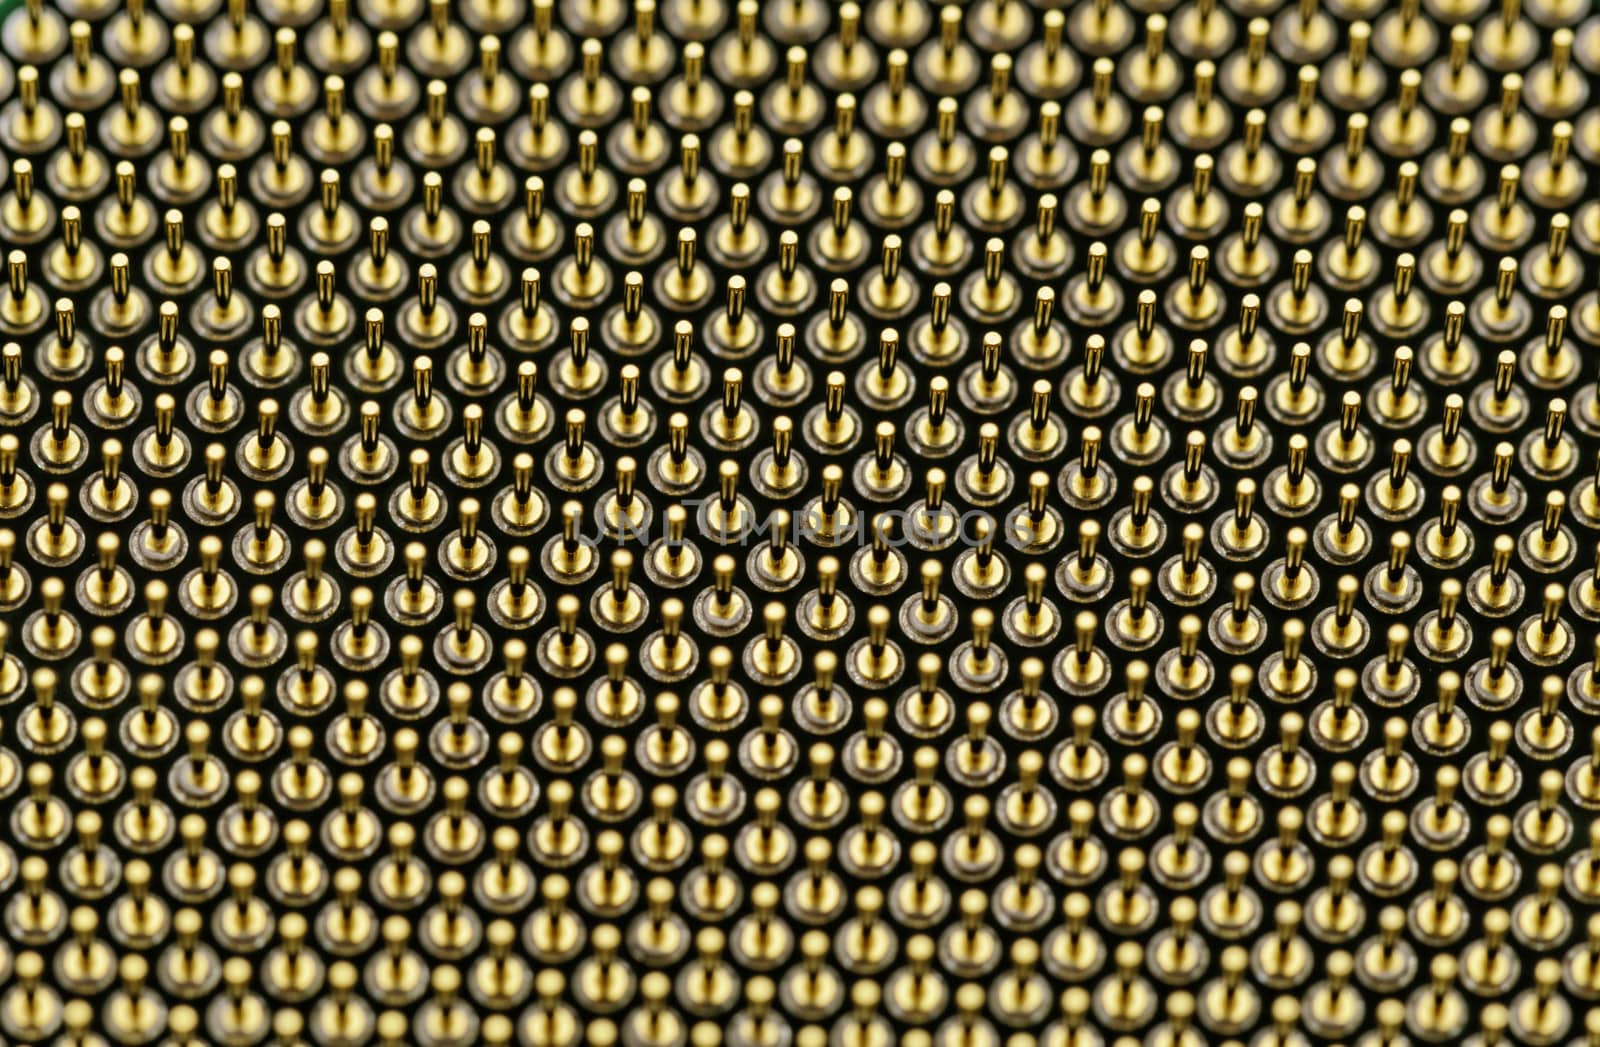 CPU pins closeup image by NagyDodo